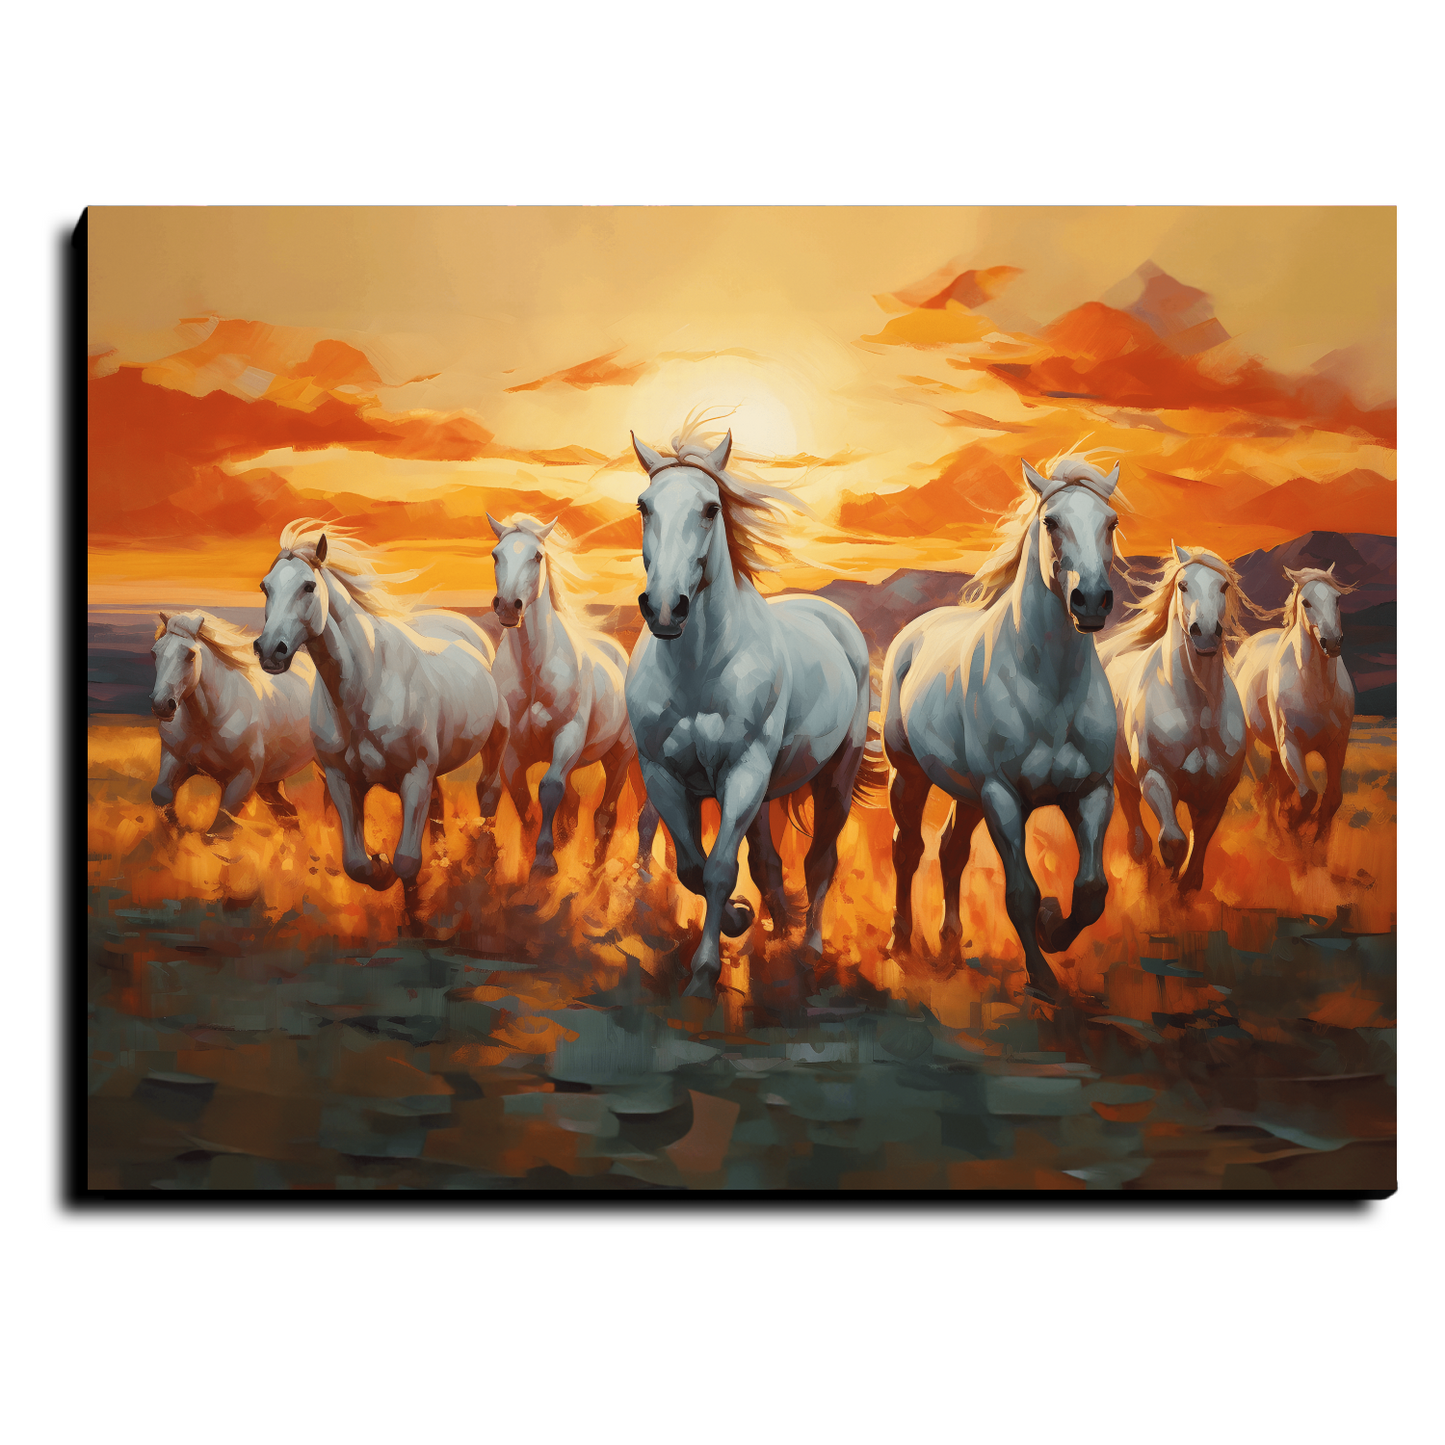 Seven White Horses Running Wood Print Wall Art